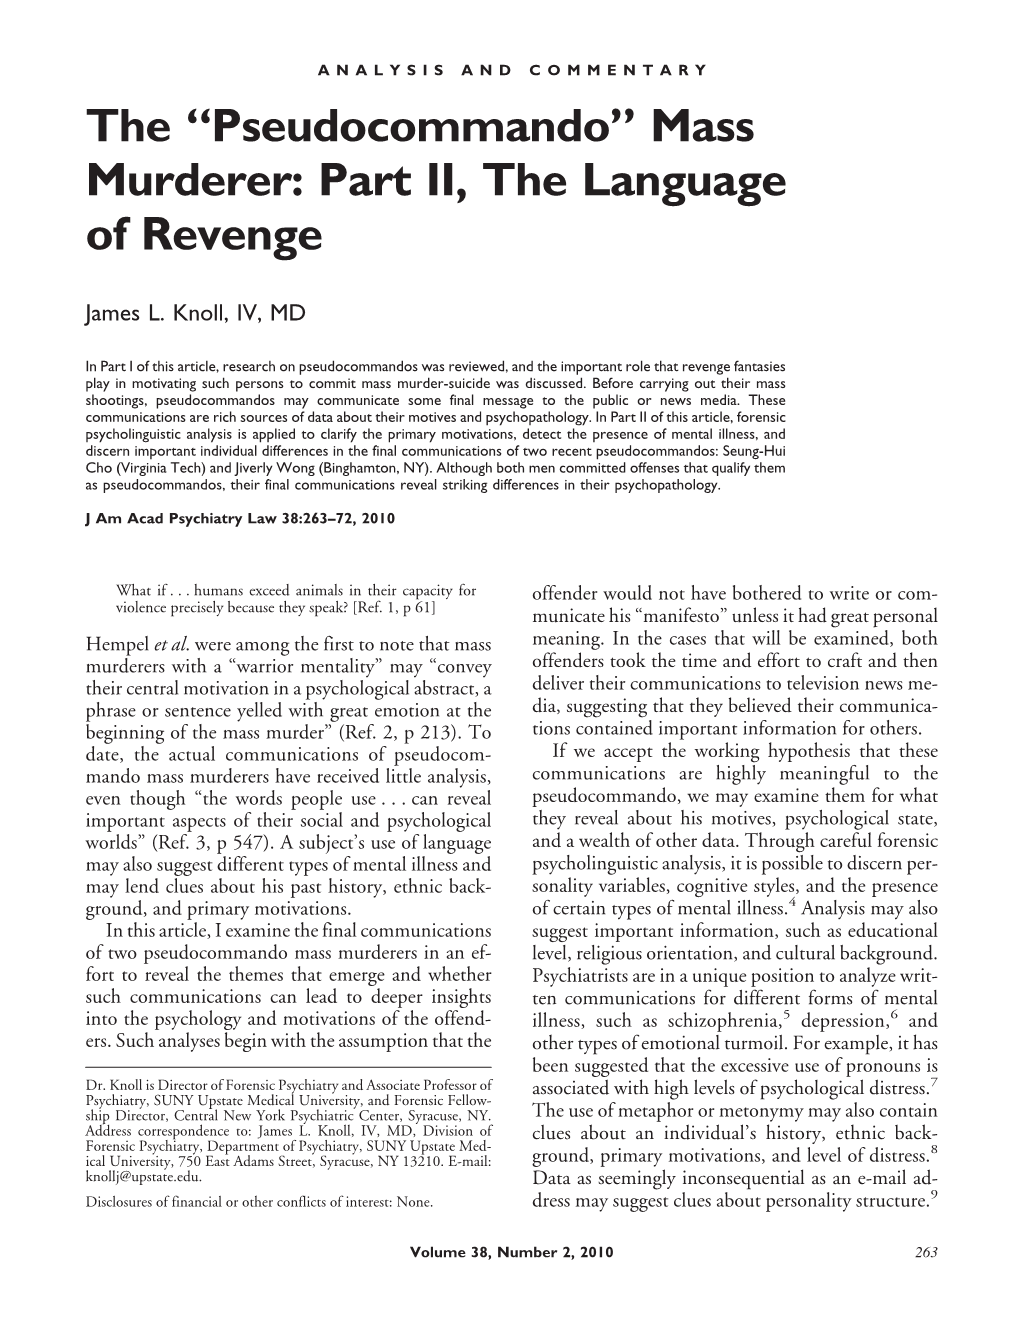 Mass Murderer: Part II, the Language of Revenge